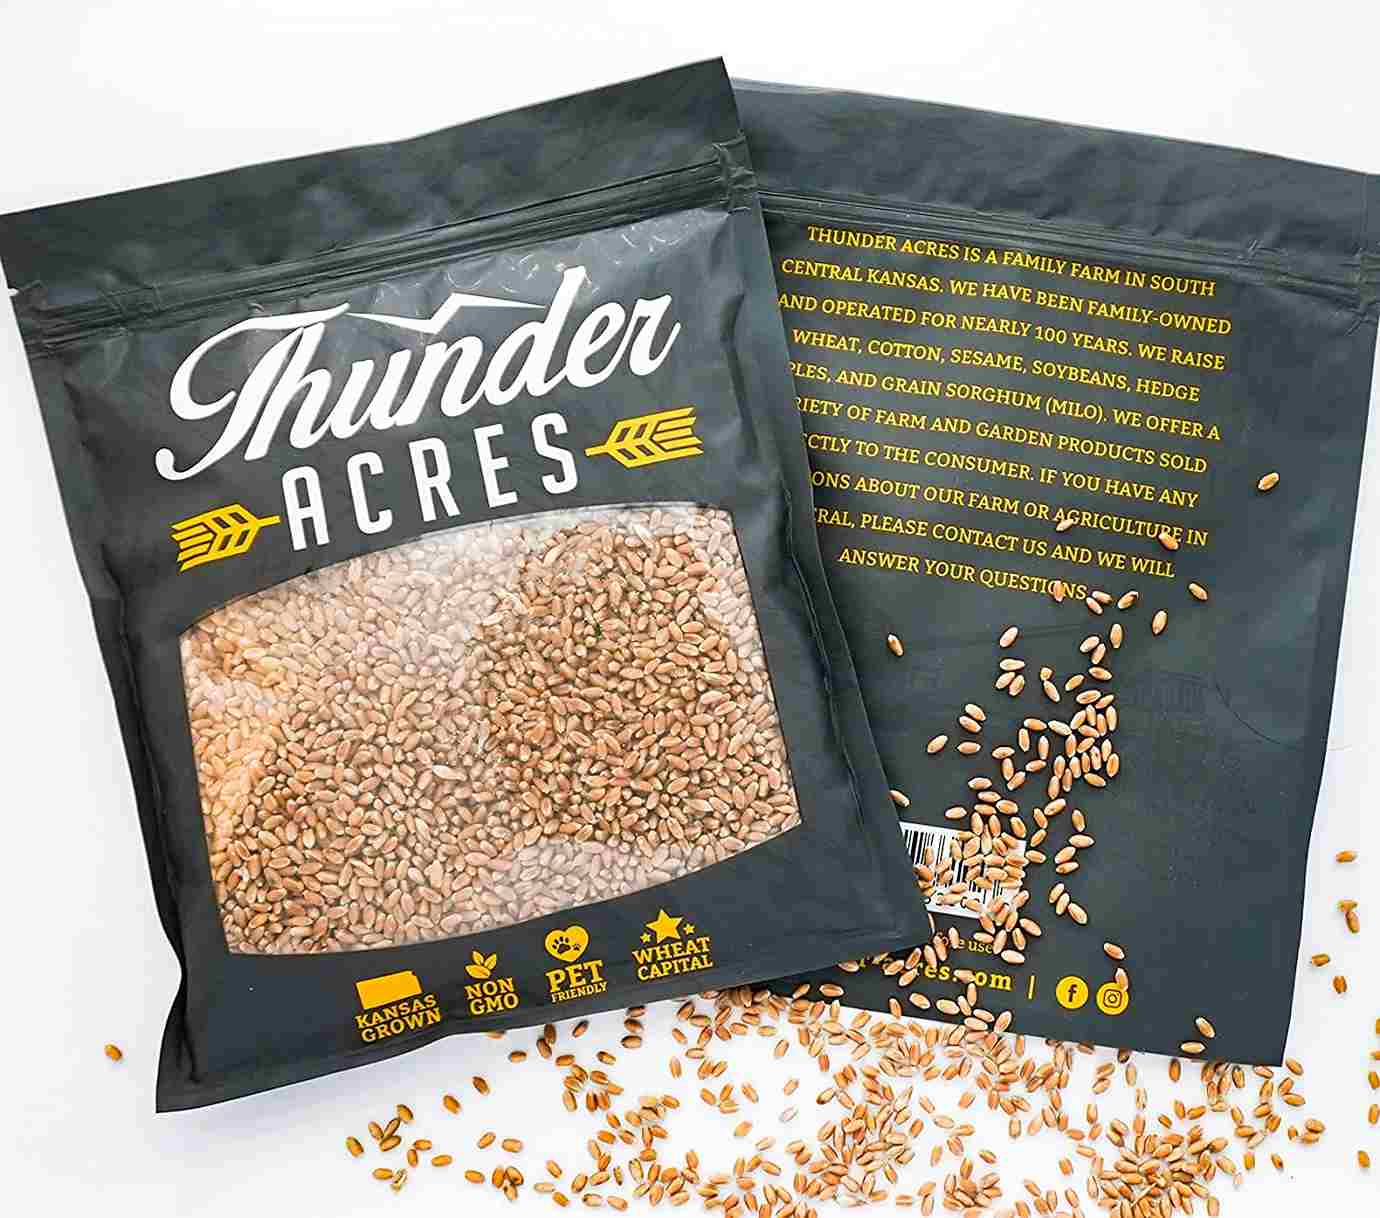 Non-GMO, Thunder Acres Premium Wheat Seed, Cat Grass Seed, Wheatgrass, Hard Red Winter Wheat (2 lbs.)